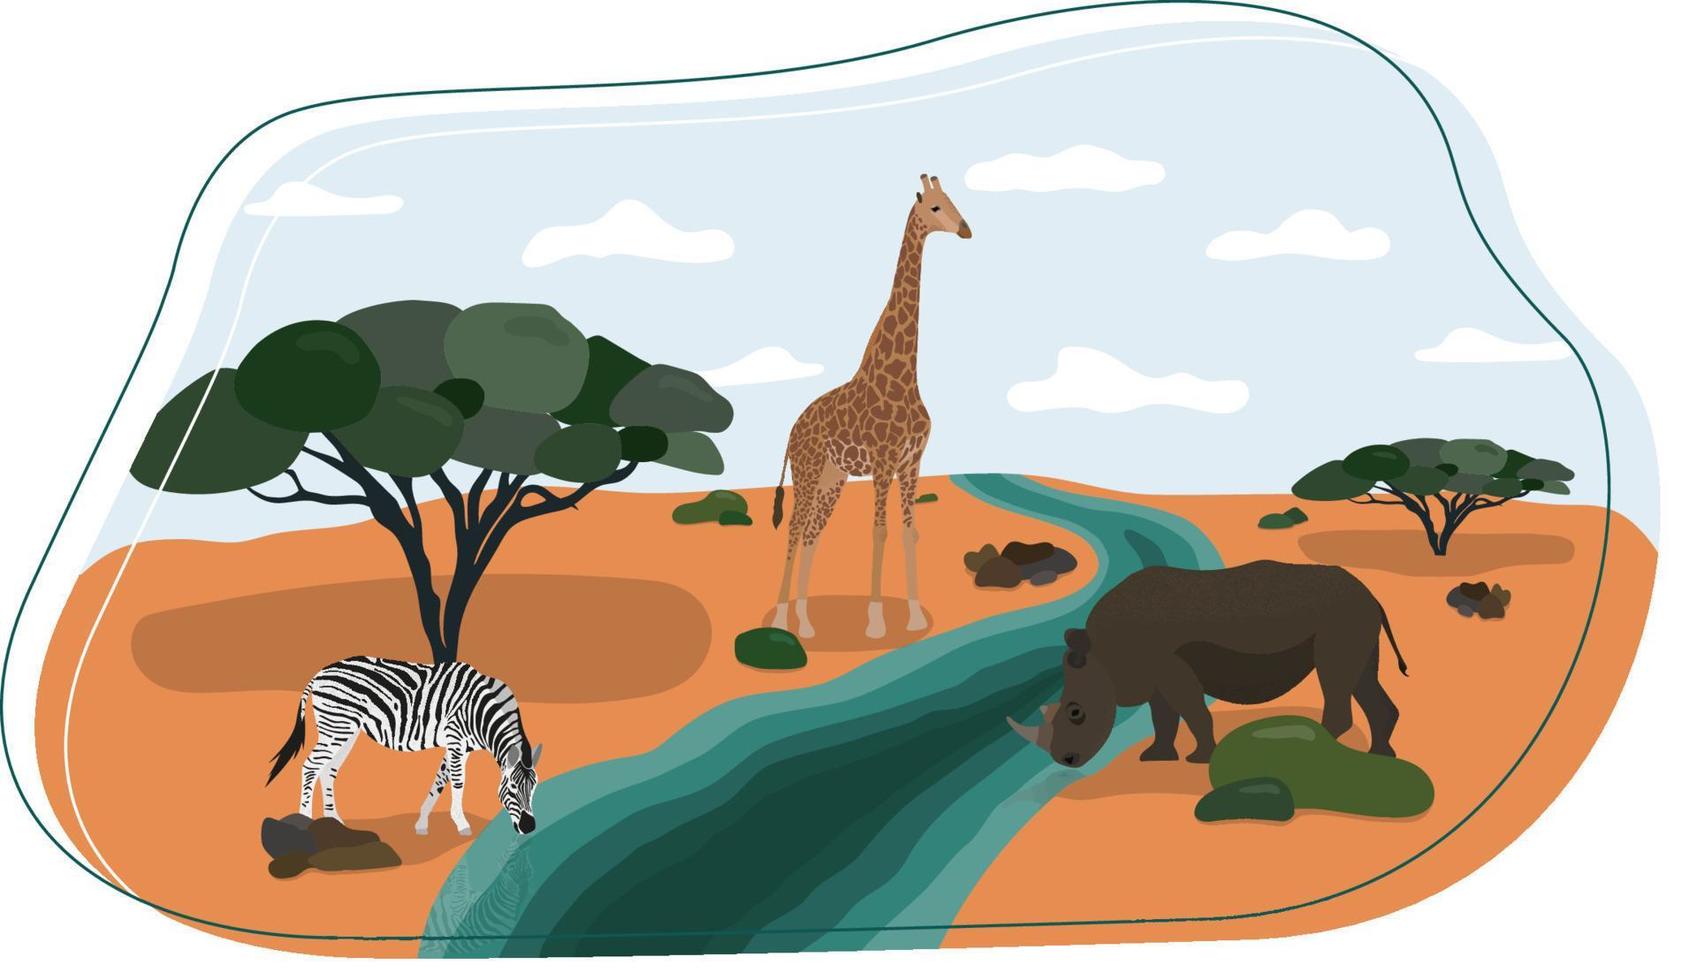 Wild animals in Savannah. Hippo, zebra and giraffe. Beautiful illustration in flat style vector